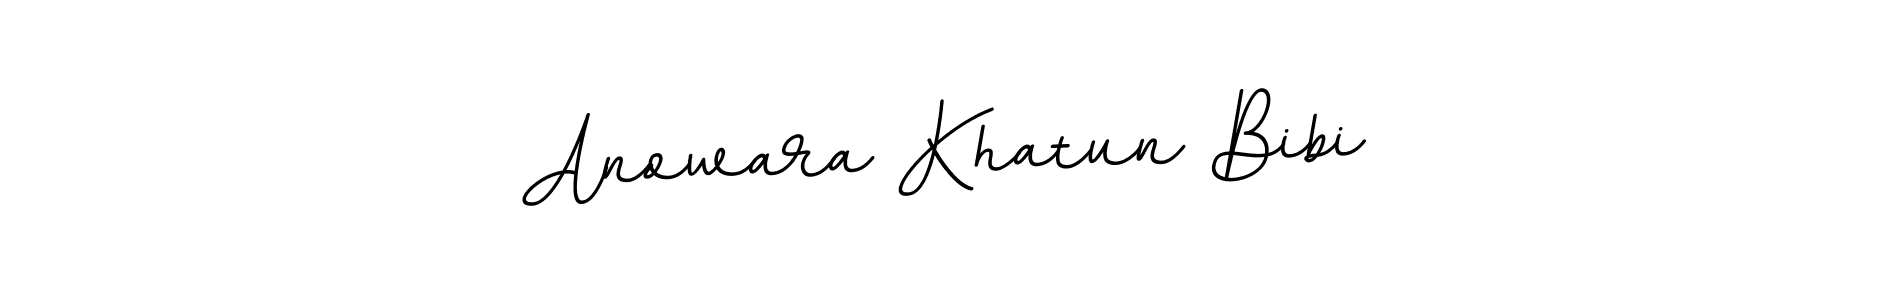 How to Draw Anowara Khatun Bibi signature style? BallpointsItalic-DORy9 is a latest design signature styles for name Anowara Khatun Bibi. Anowara Khatun Bibi signature style 11 images and pictures png